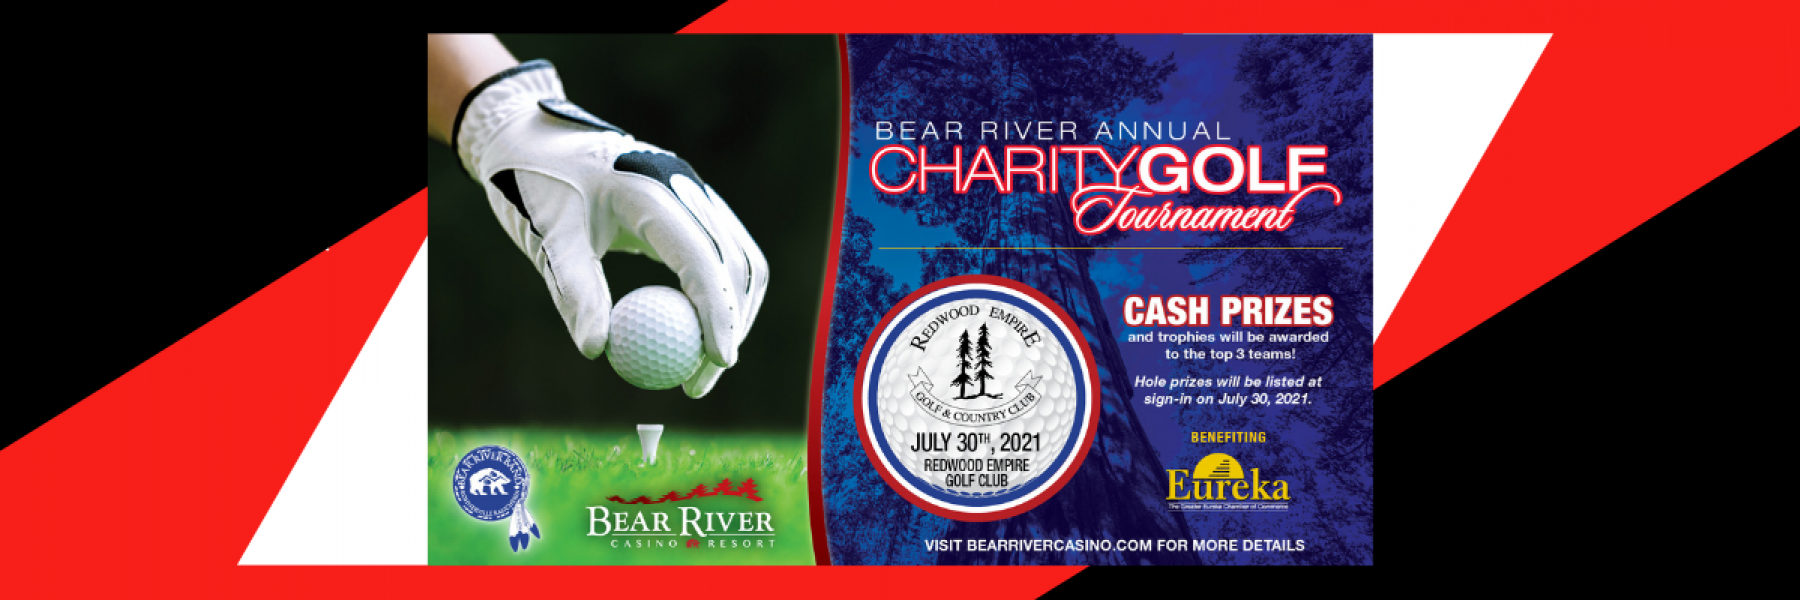 Bear River Annual Charity Golf Tournament 2021 Benefits Eureka Chamber